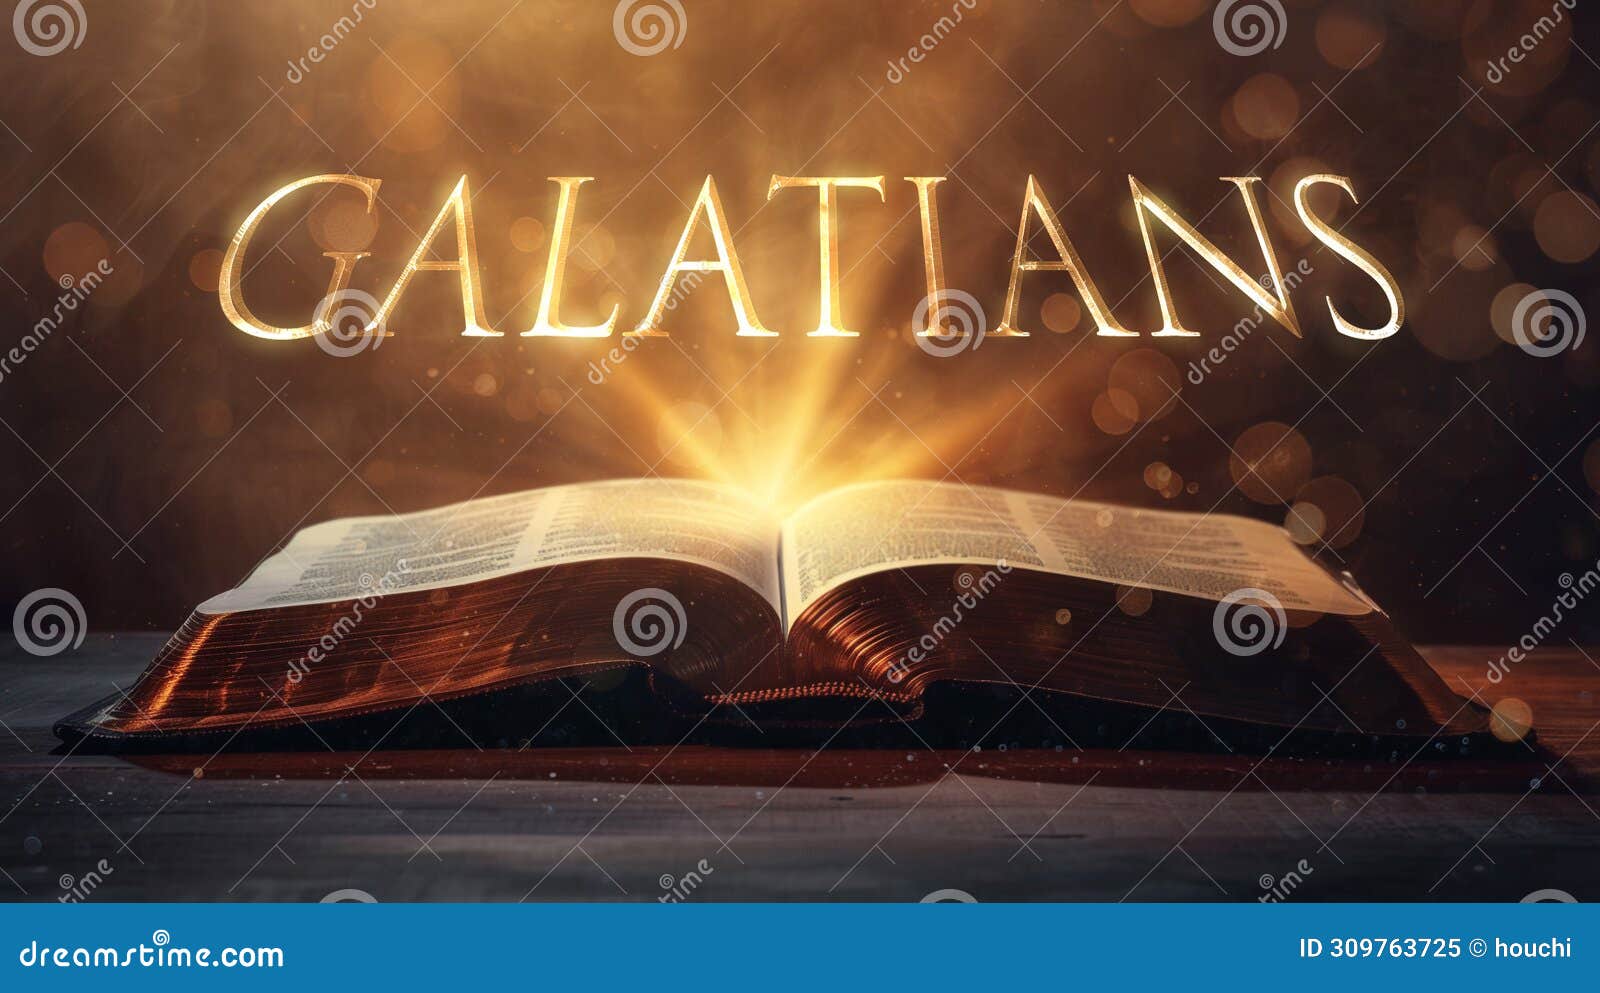 book of galatians.